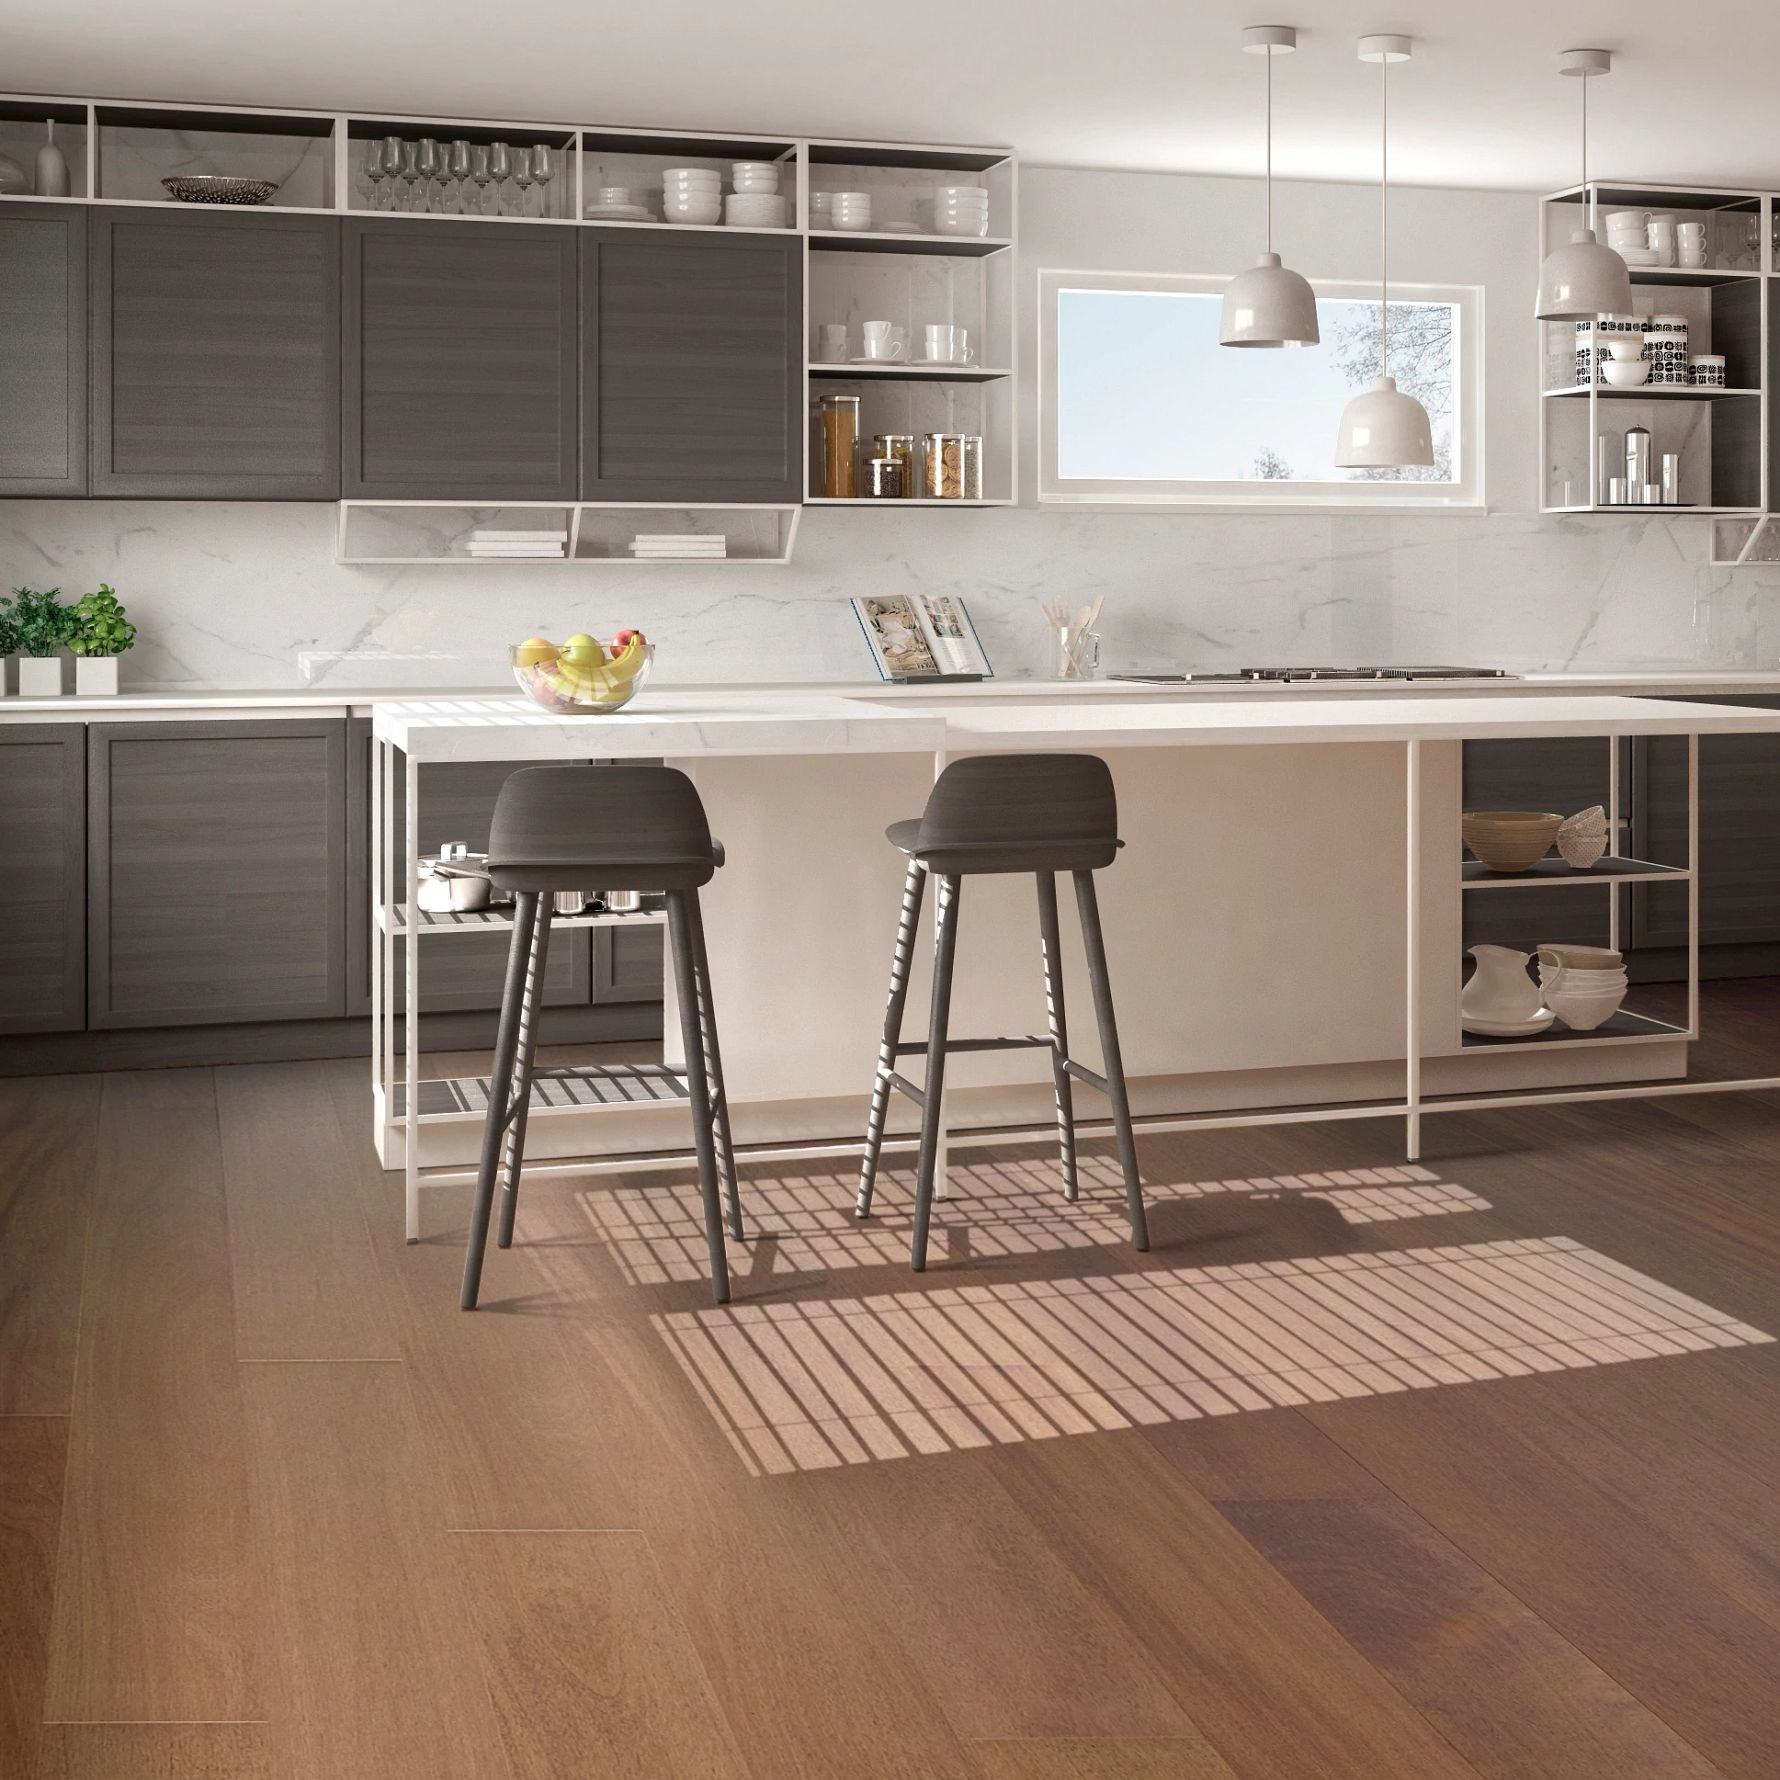 Top Kitchen Design Trends from Gerami's Floors in Lafayette